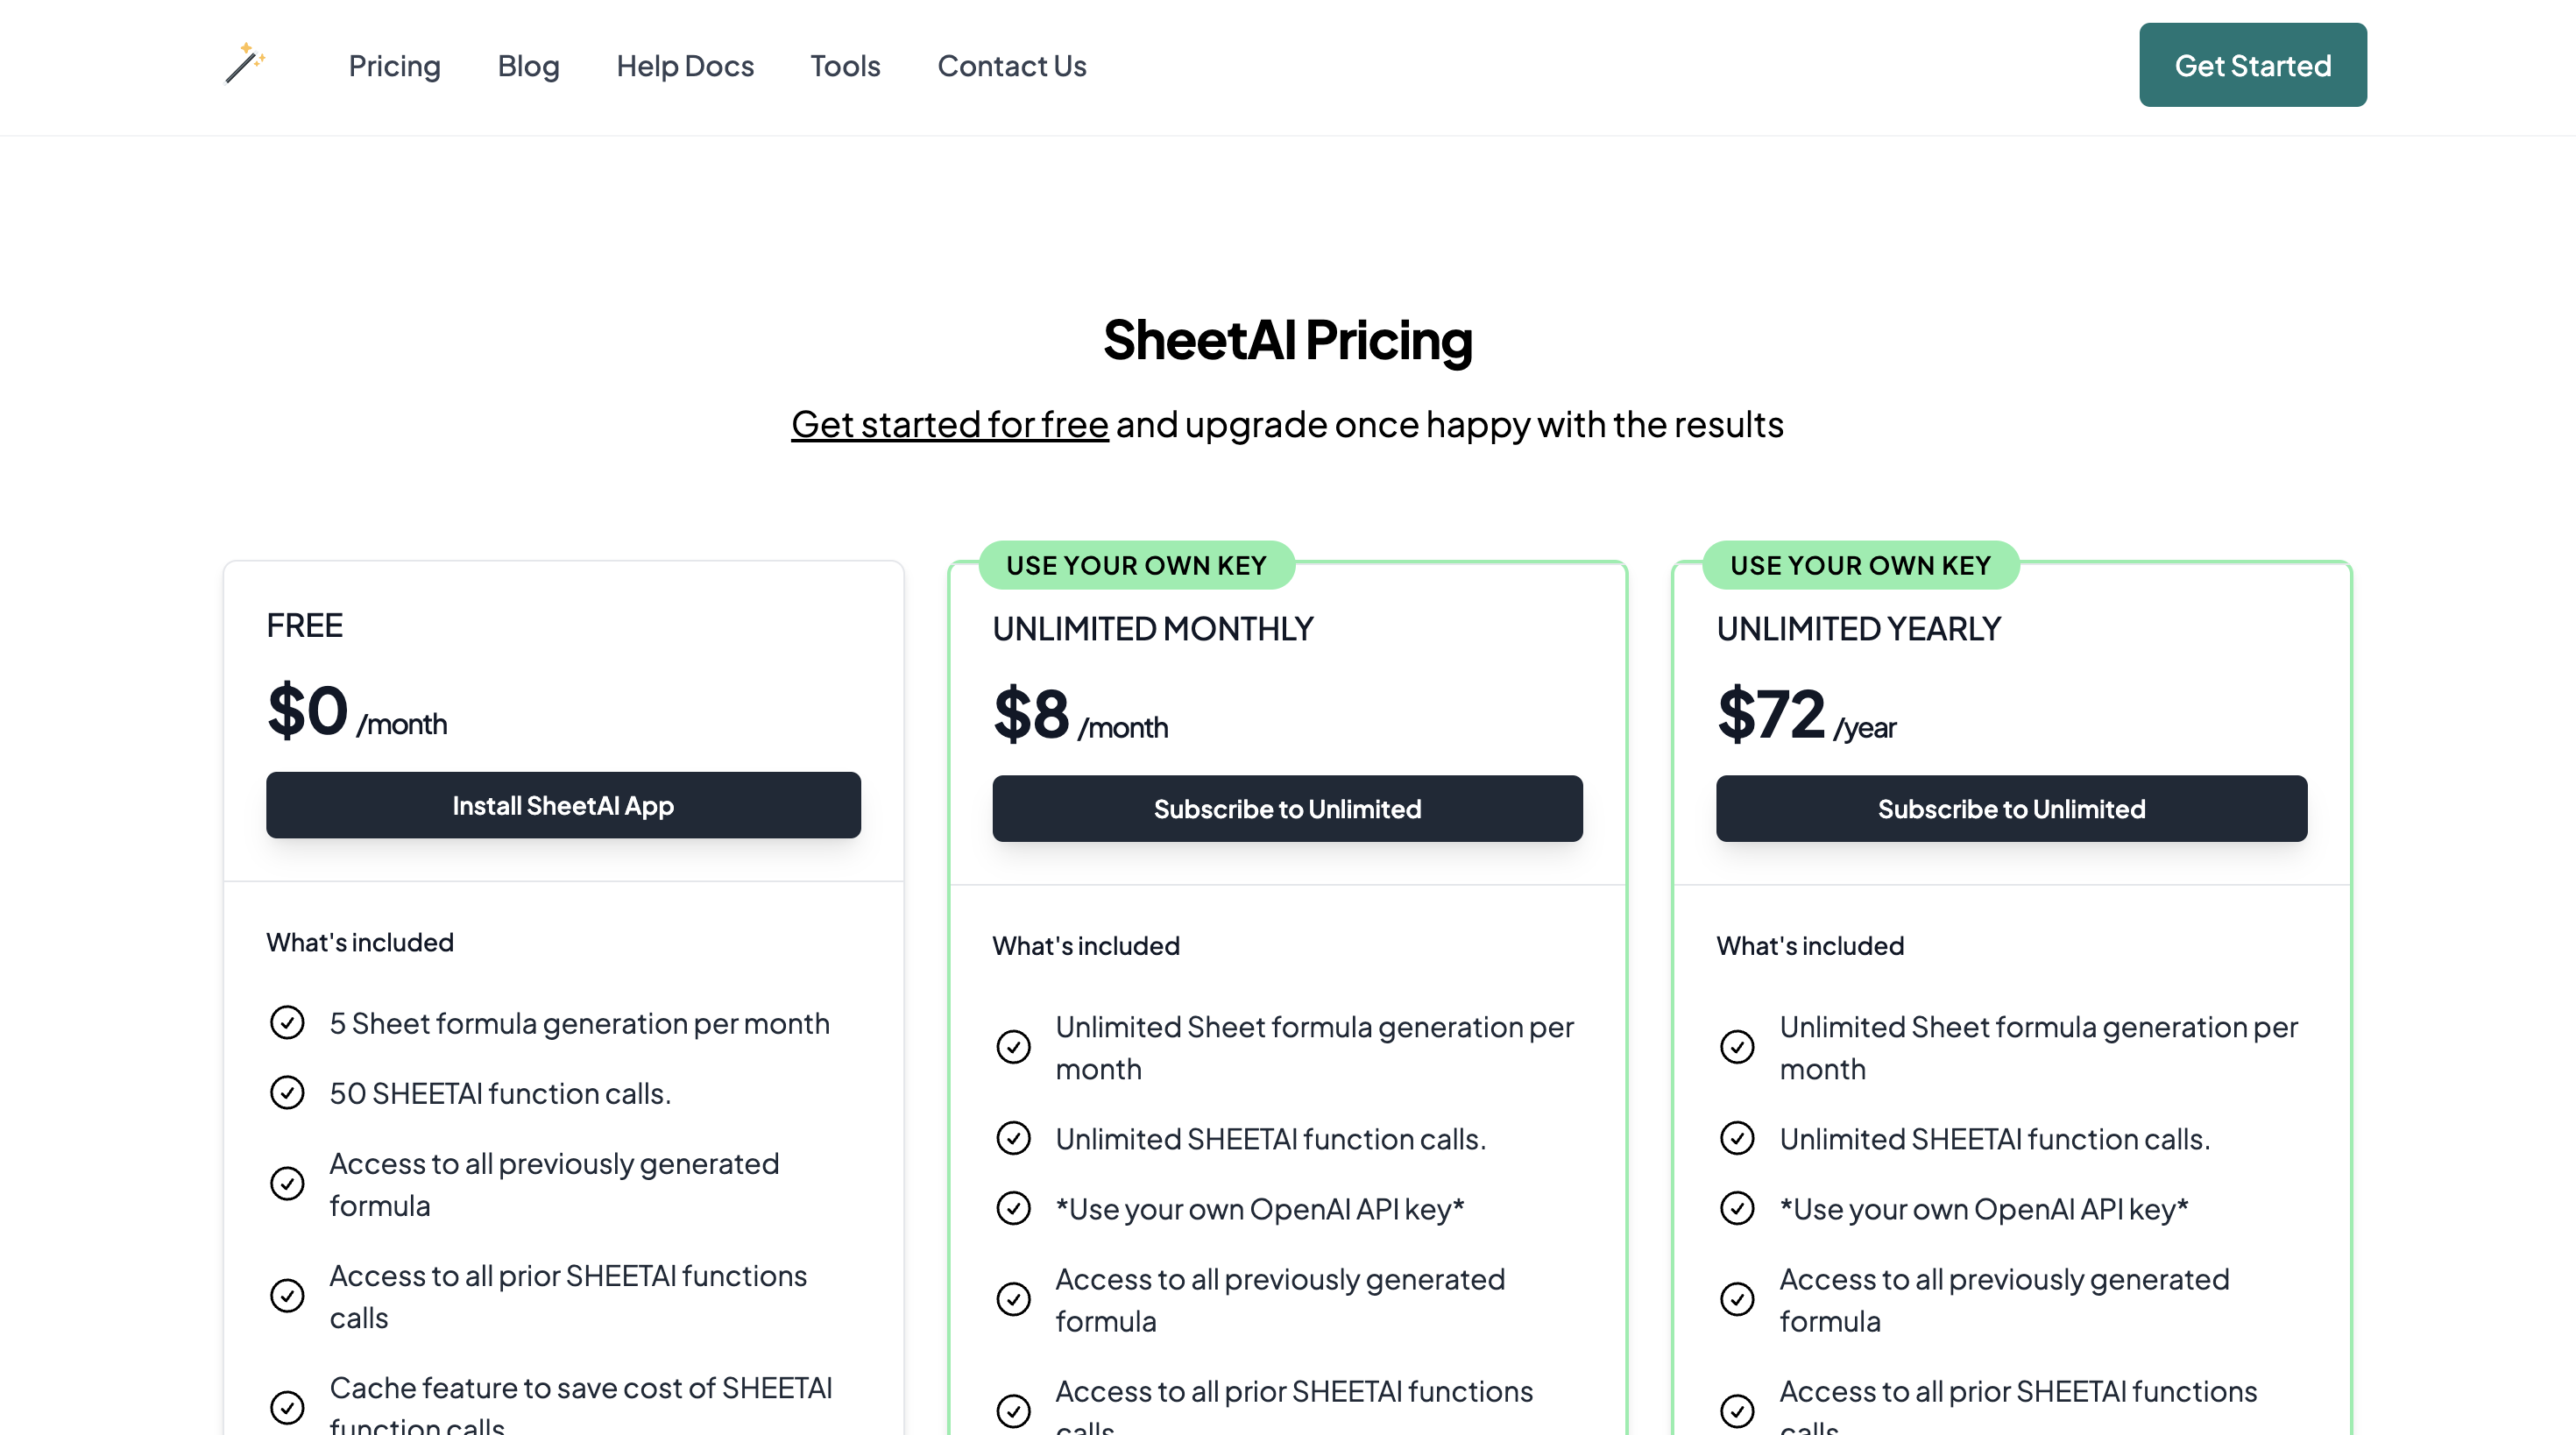 Sheet AI Pricing